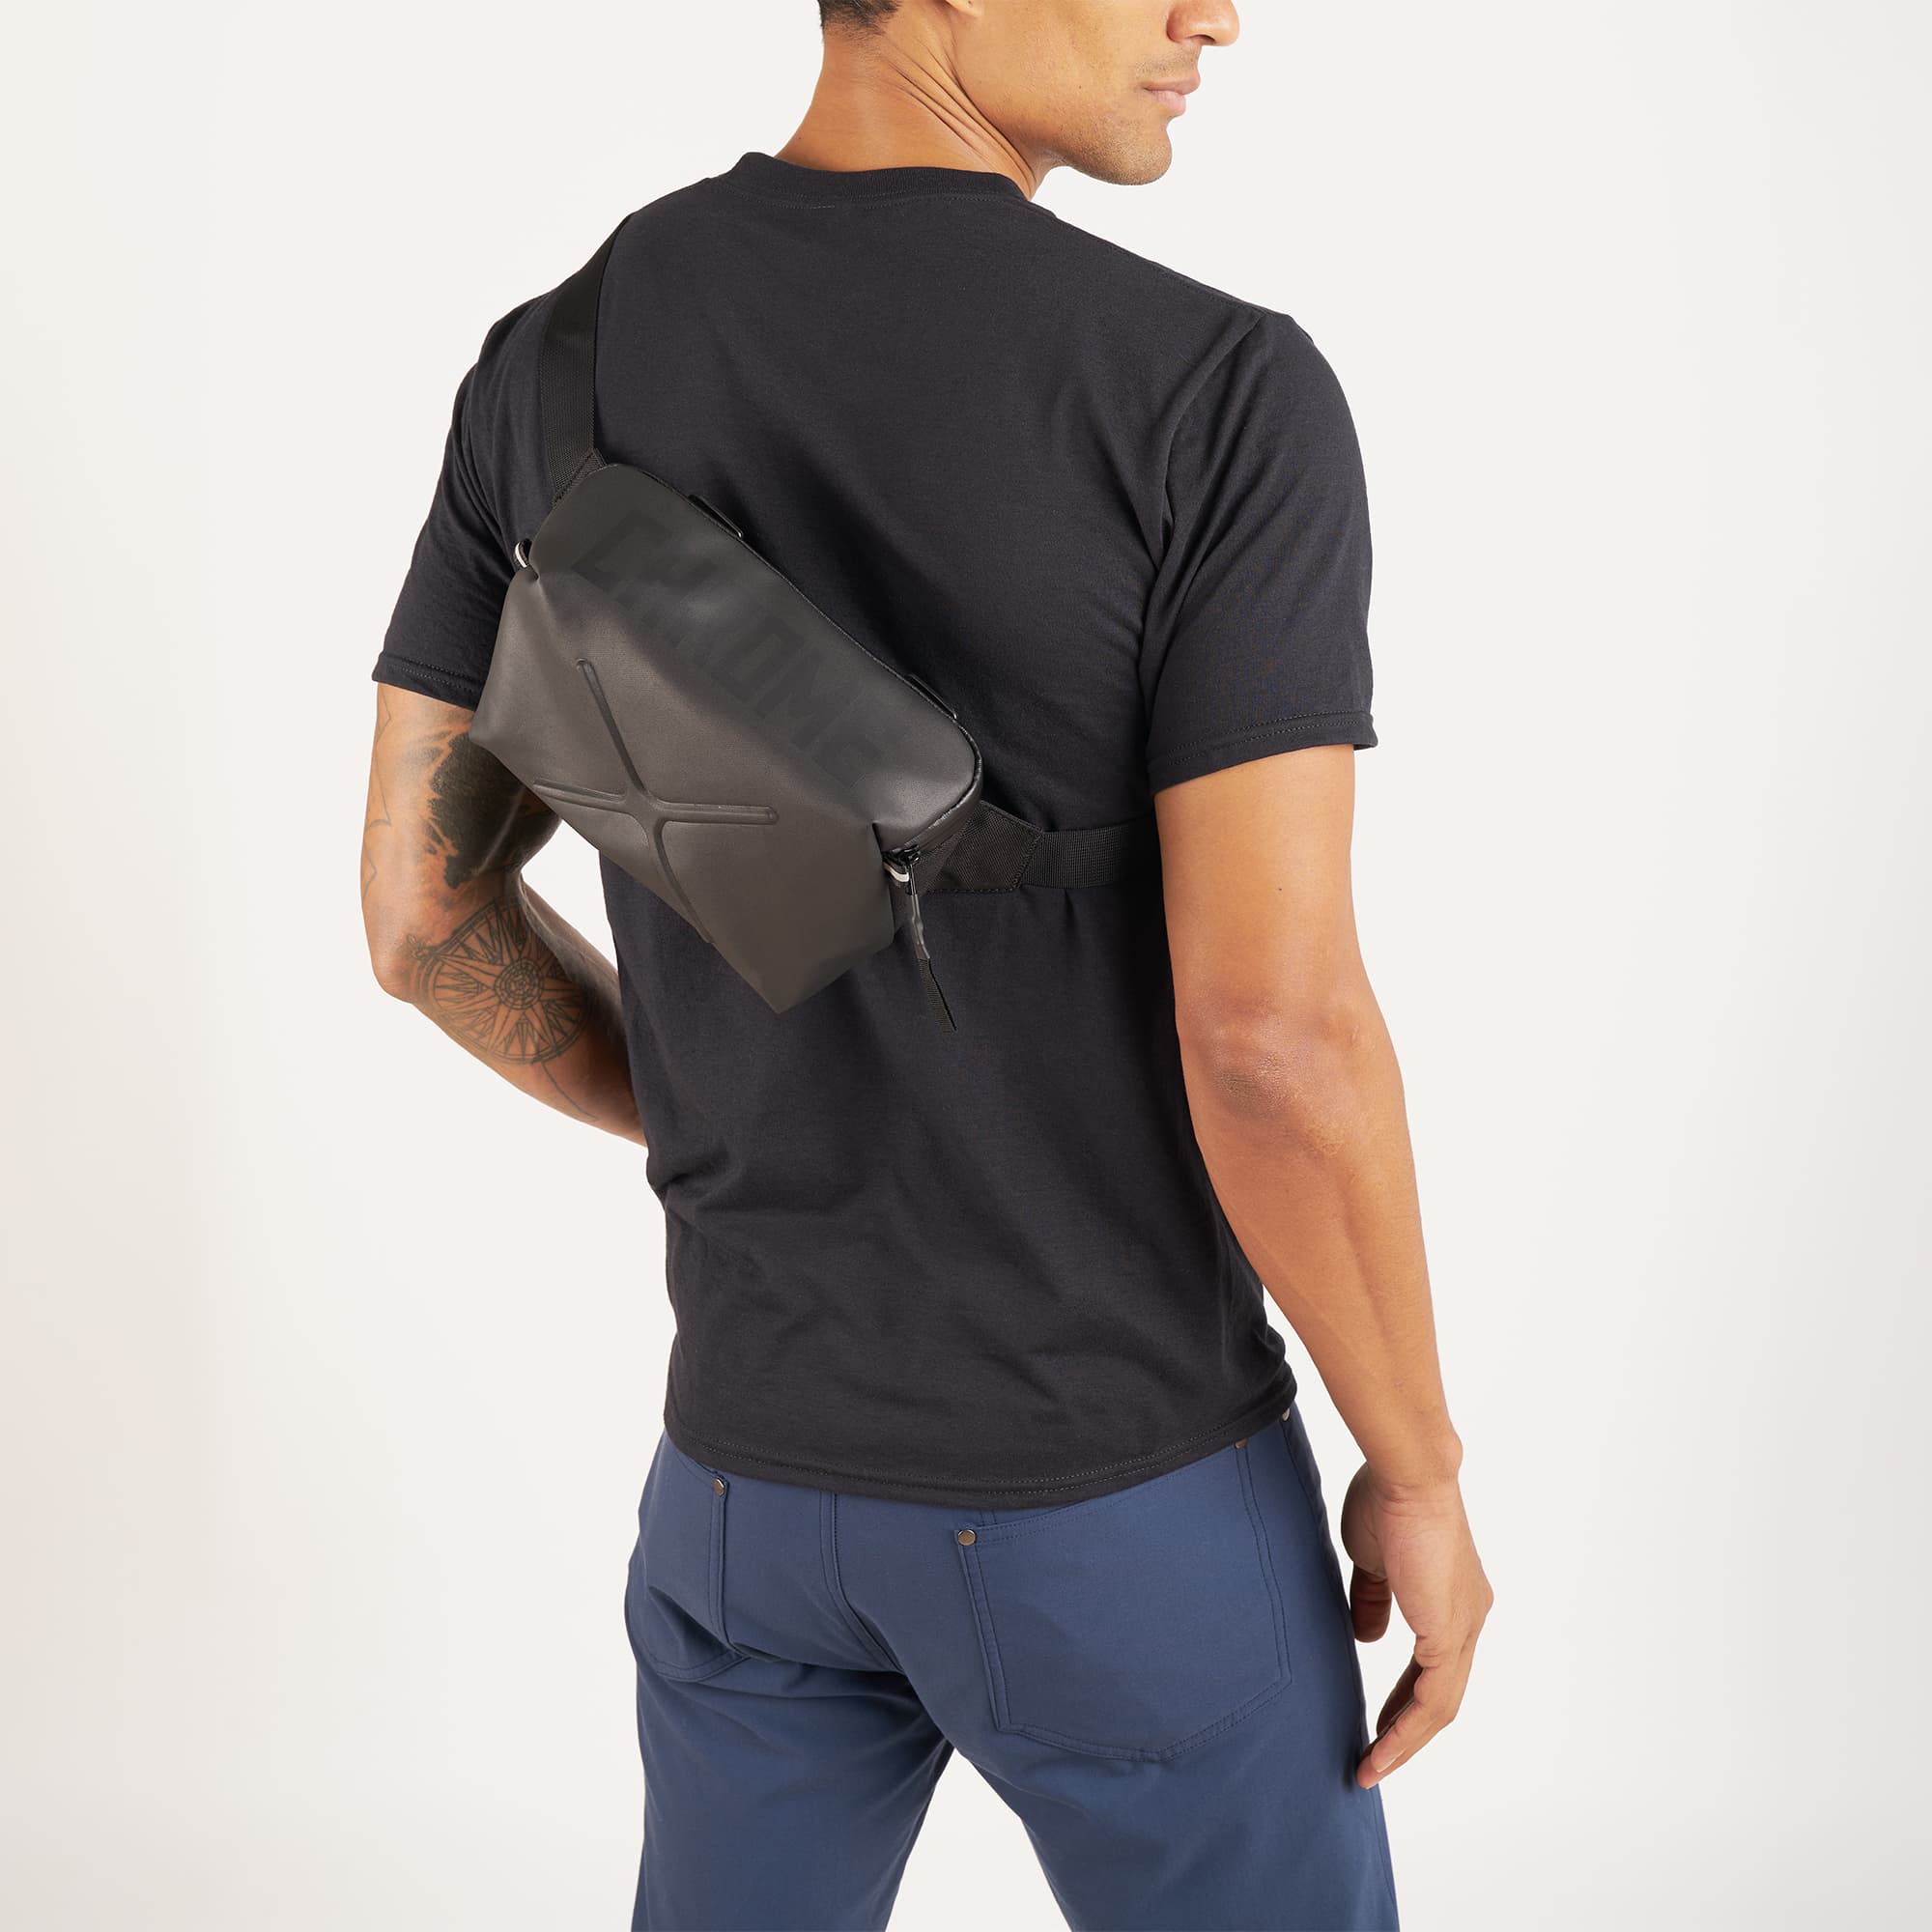 Helix Handlebar bag in black worn by a man